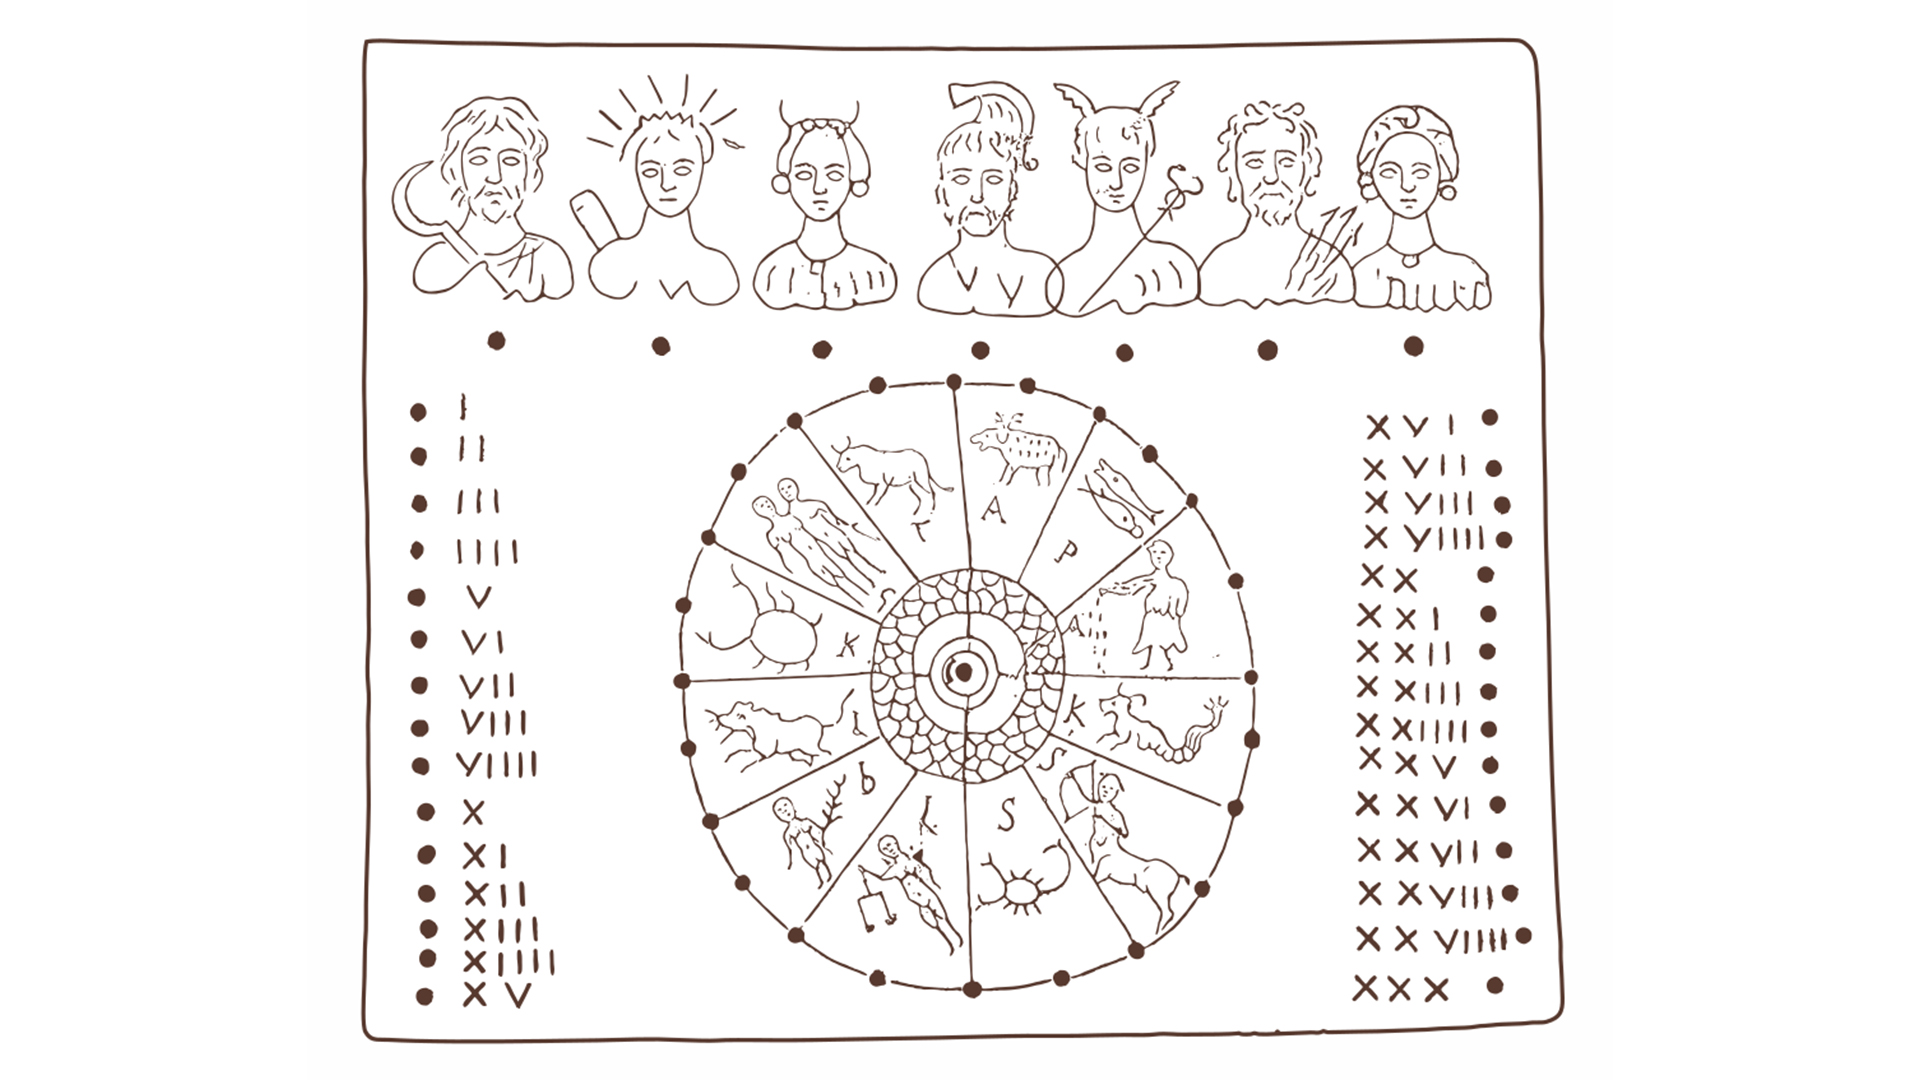 Roman calendar - parapegma (III - IV c. C.E.